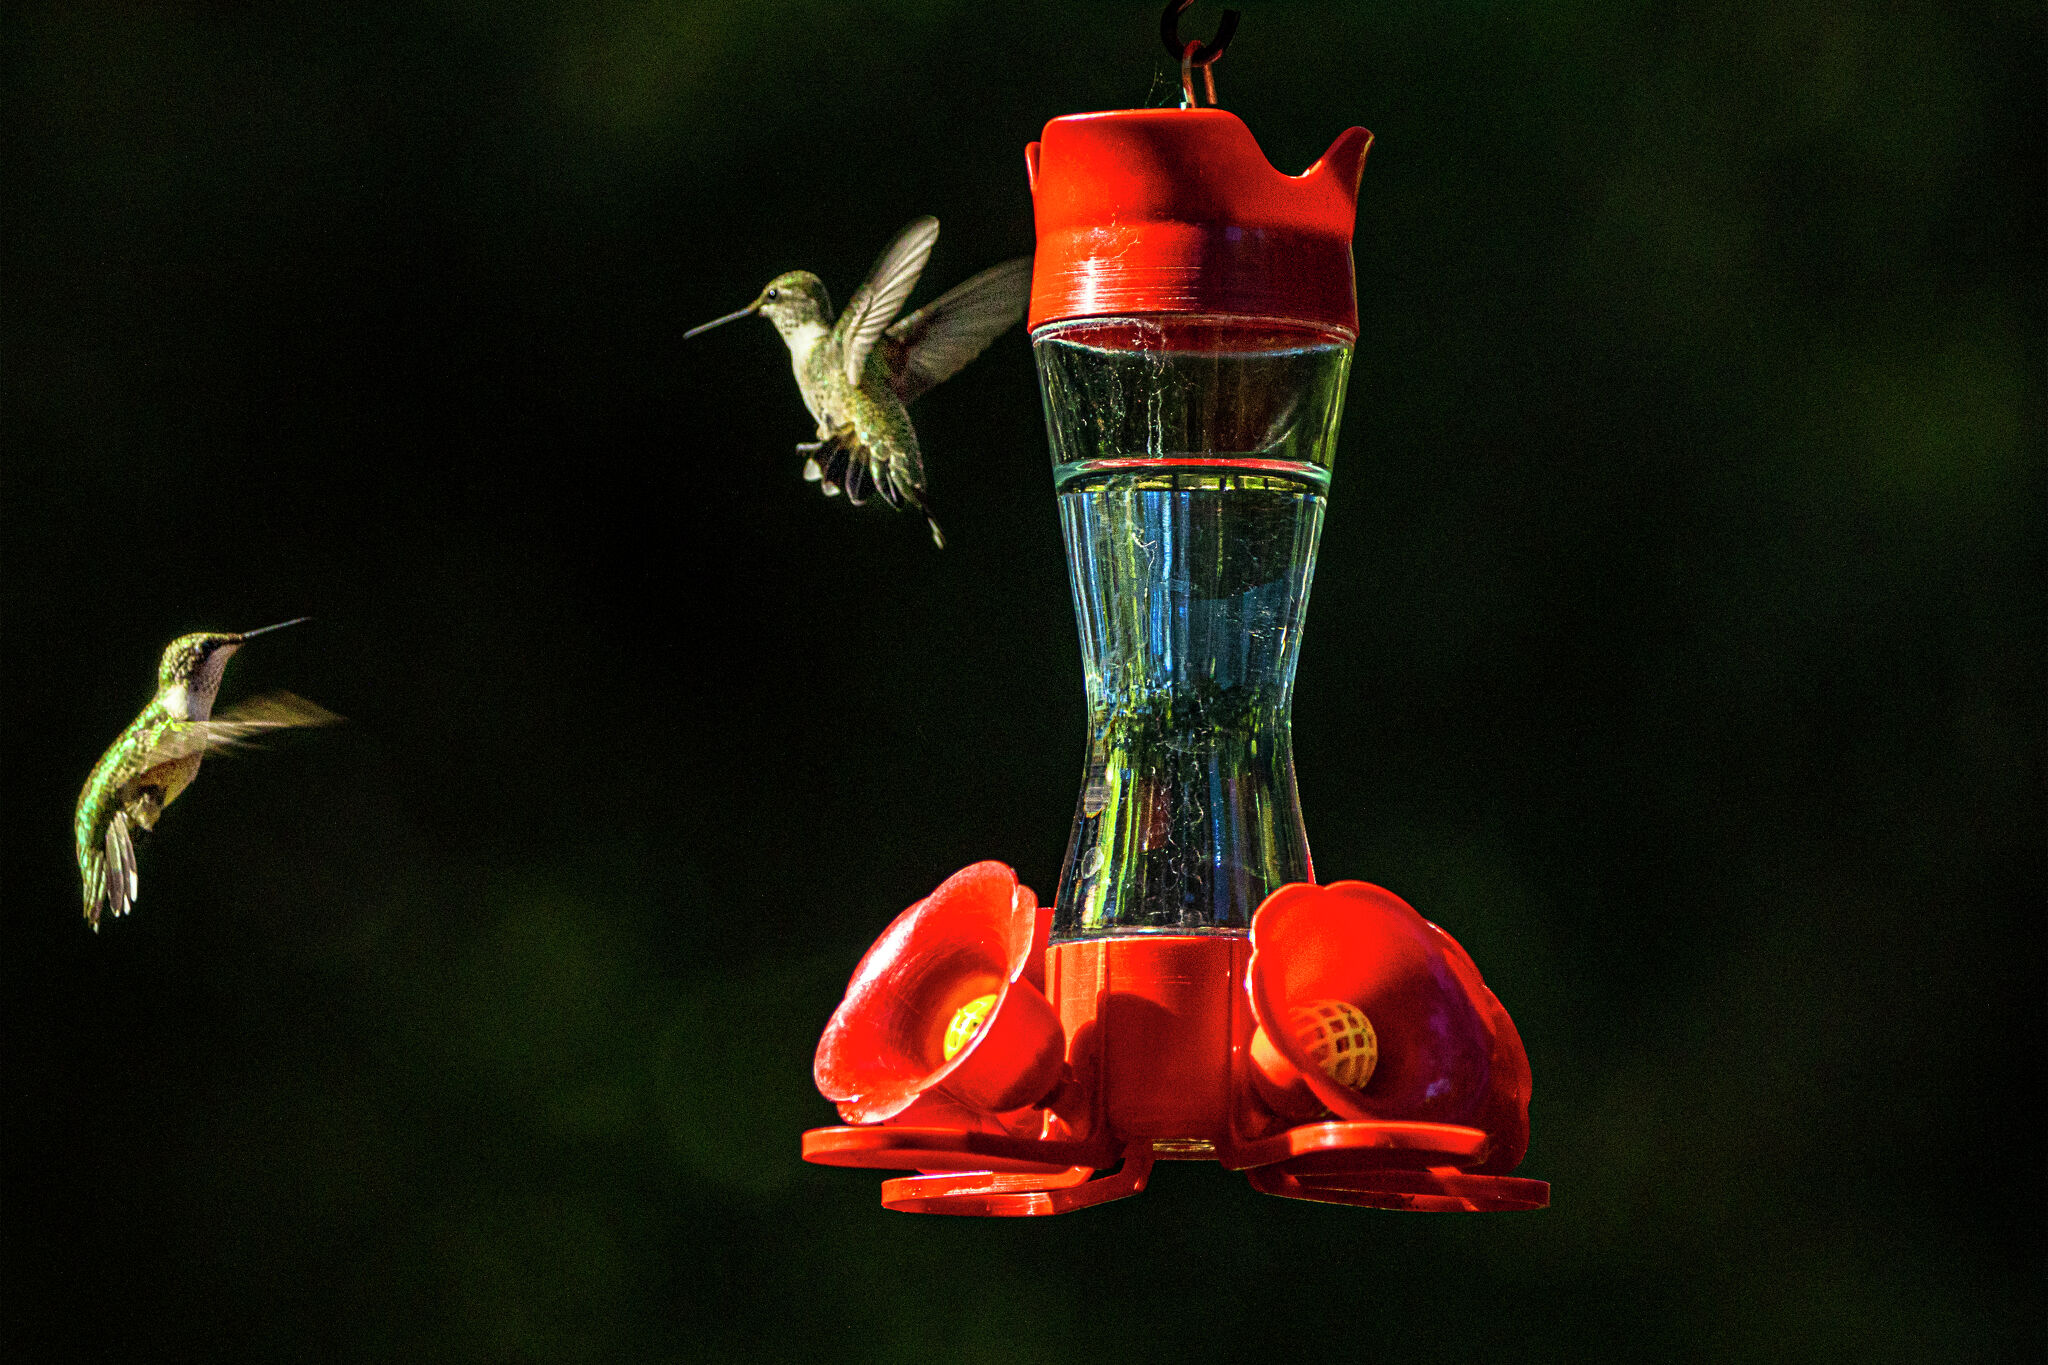 Hummingbirds migration across Texas soon to begin